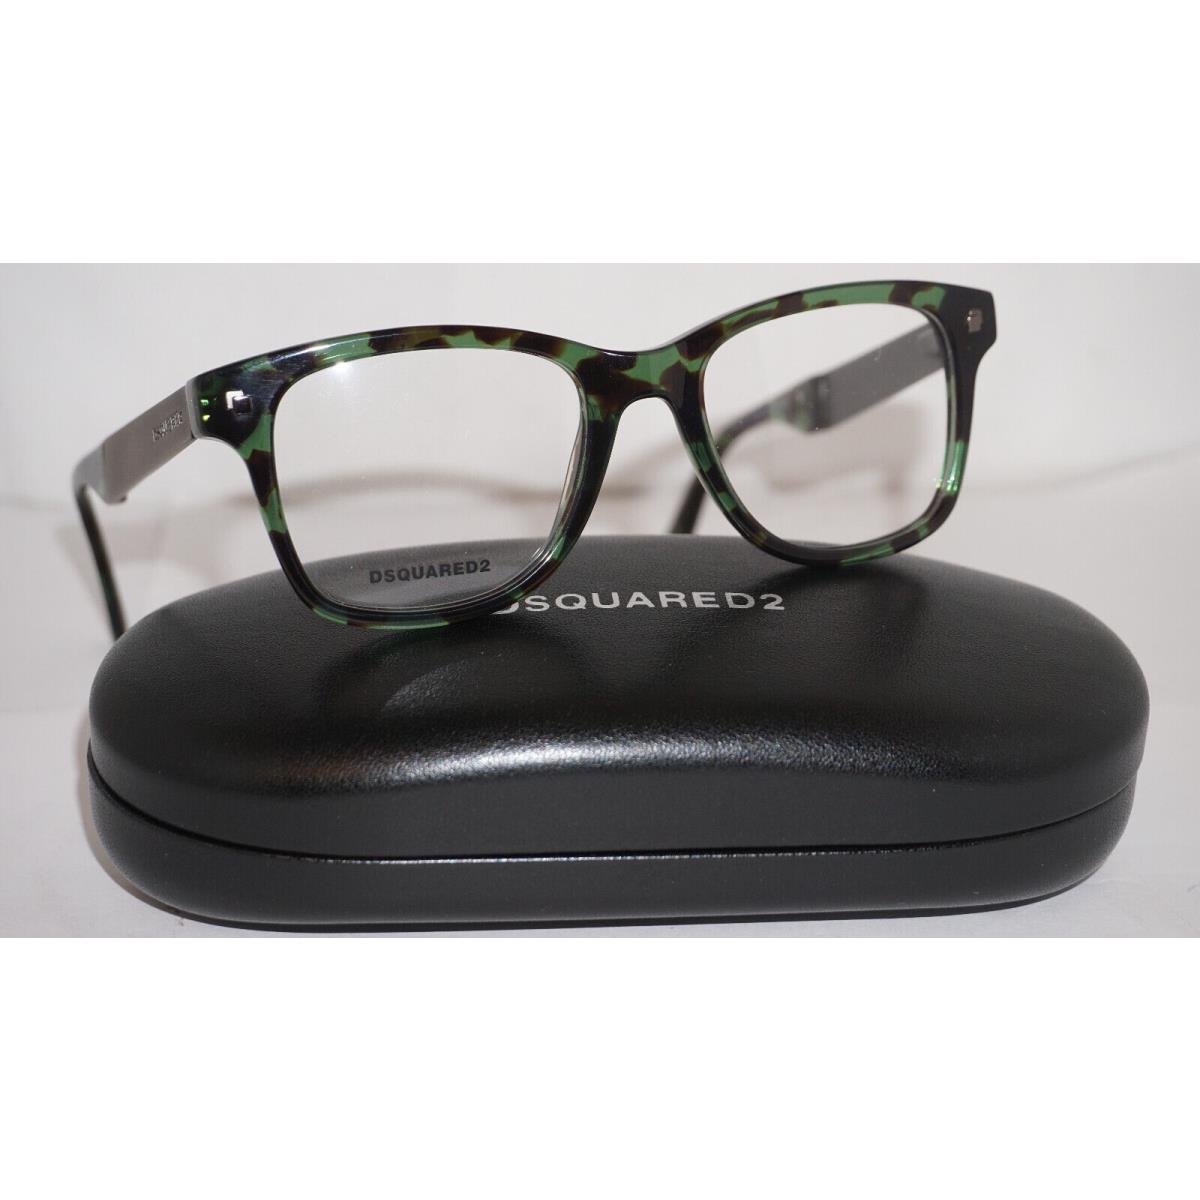 DSQUARED2 Eyeglasses Multicolor Green DQ5130/V 055 49 18 145